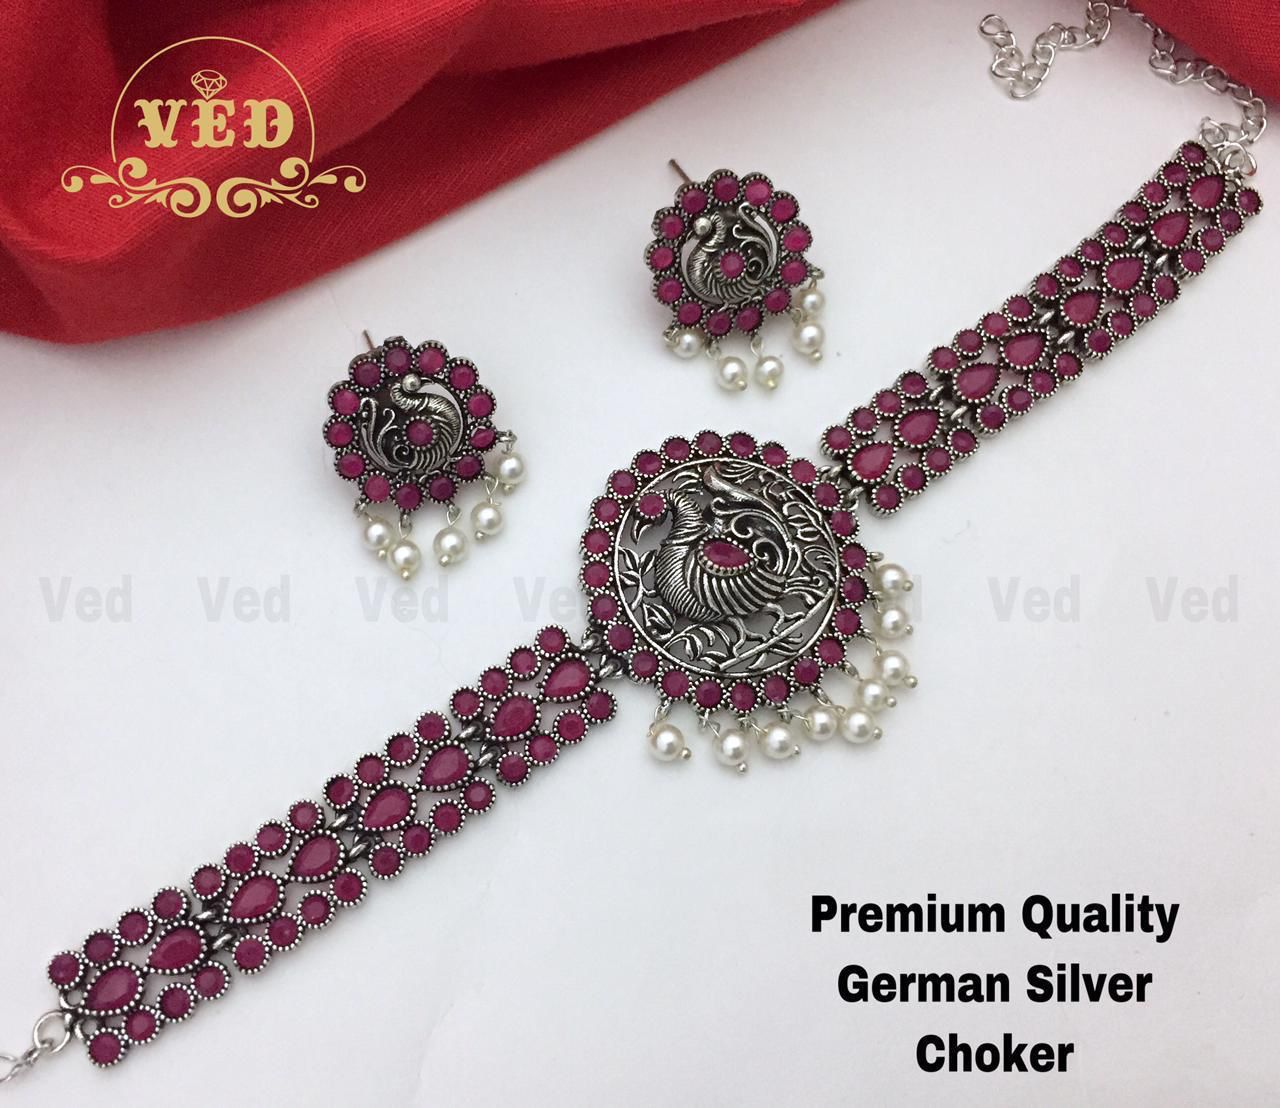 Premium Quality German Silver Choker- SHJ1010